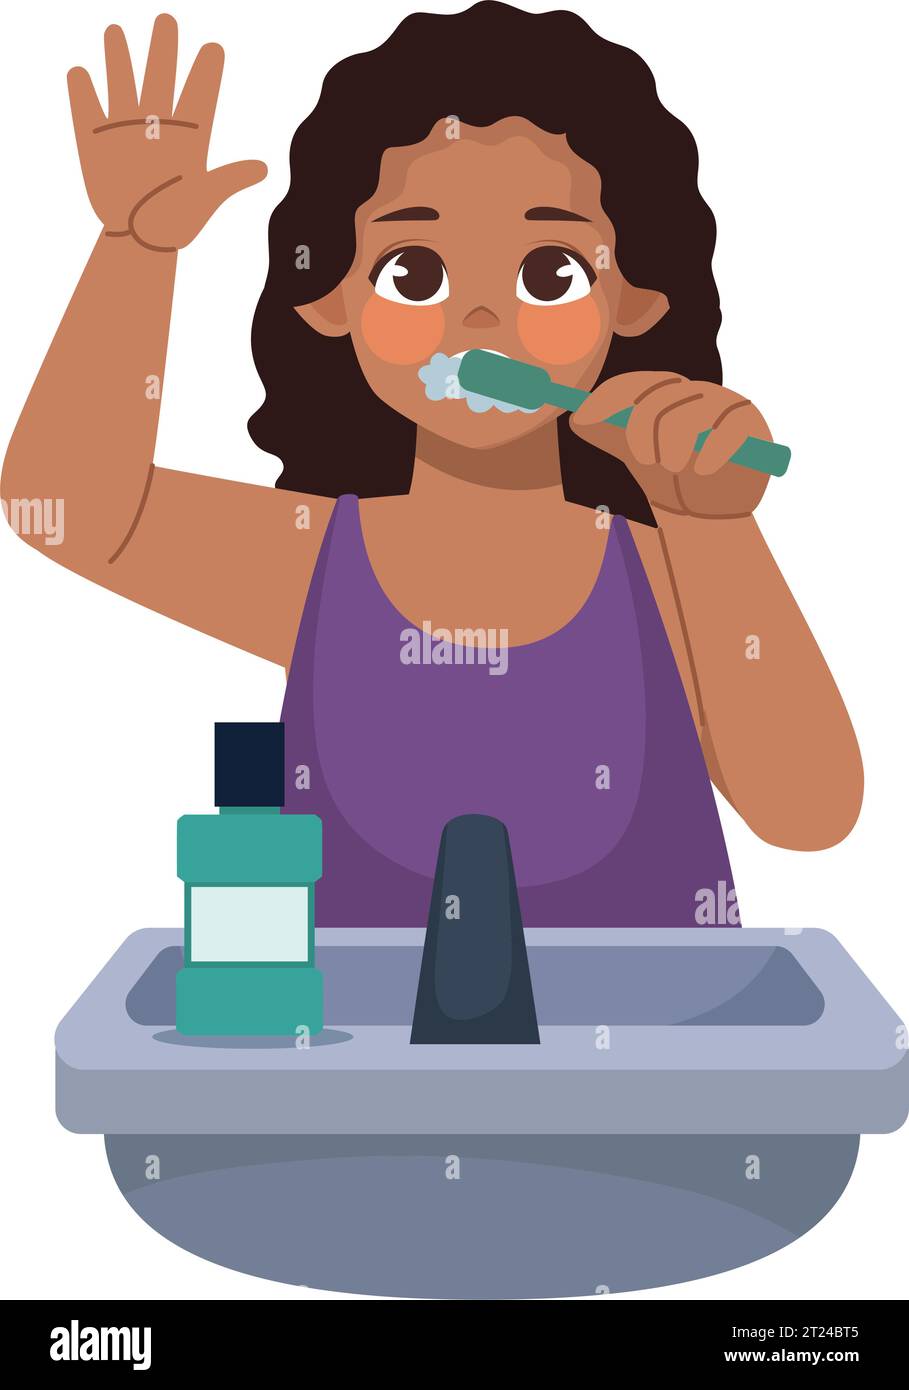 woman brushing teeths design Stock Vector